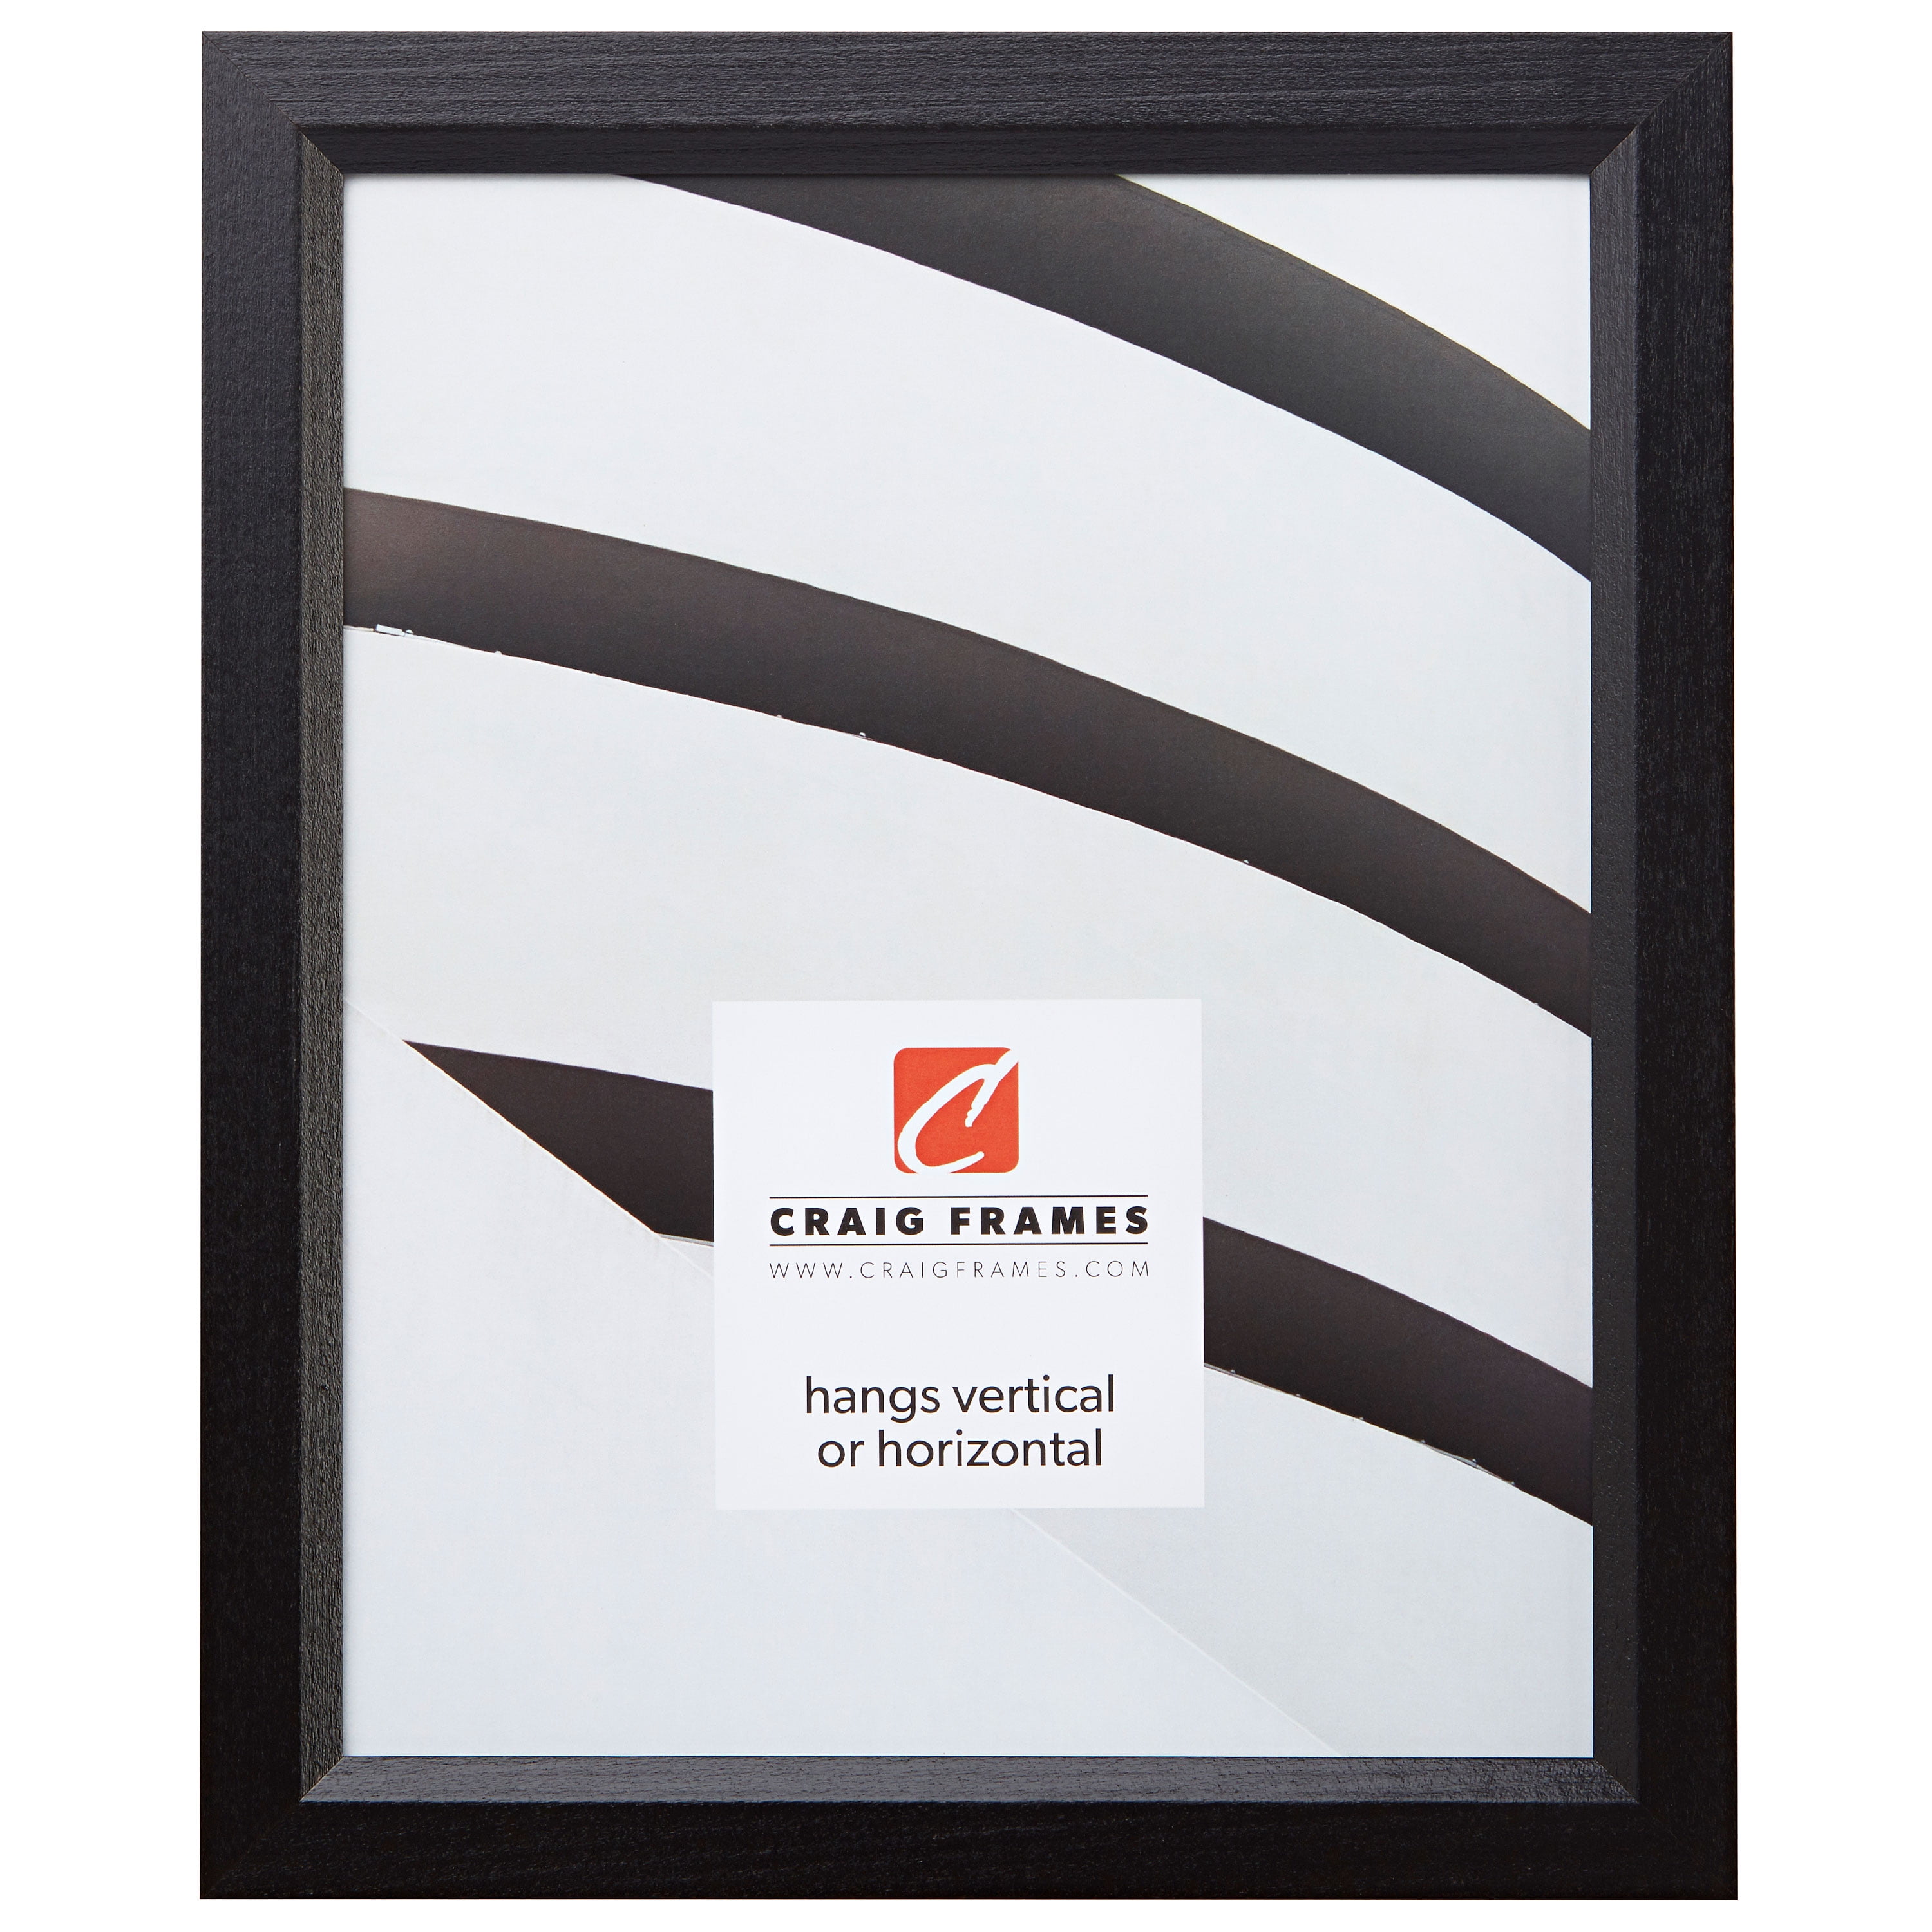 Details about   Dax Black Solid Wood Poster Frames w/Plastic Window Wide Profile 24 x 36 2863U2X 